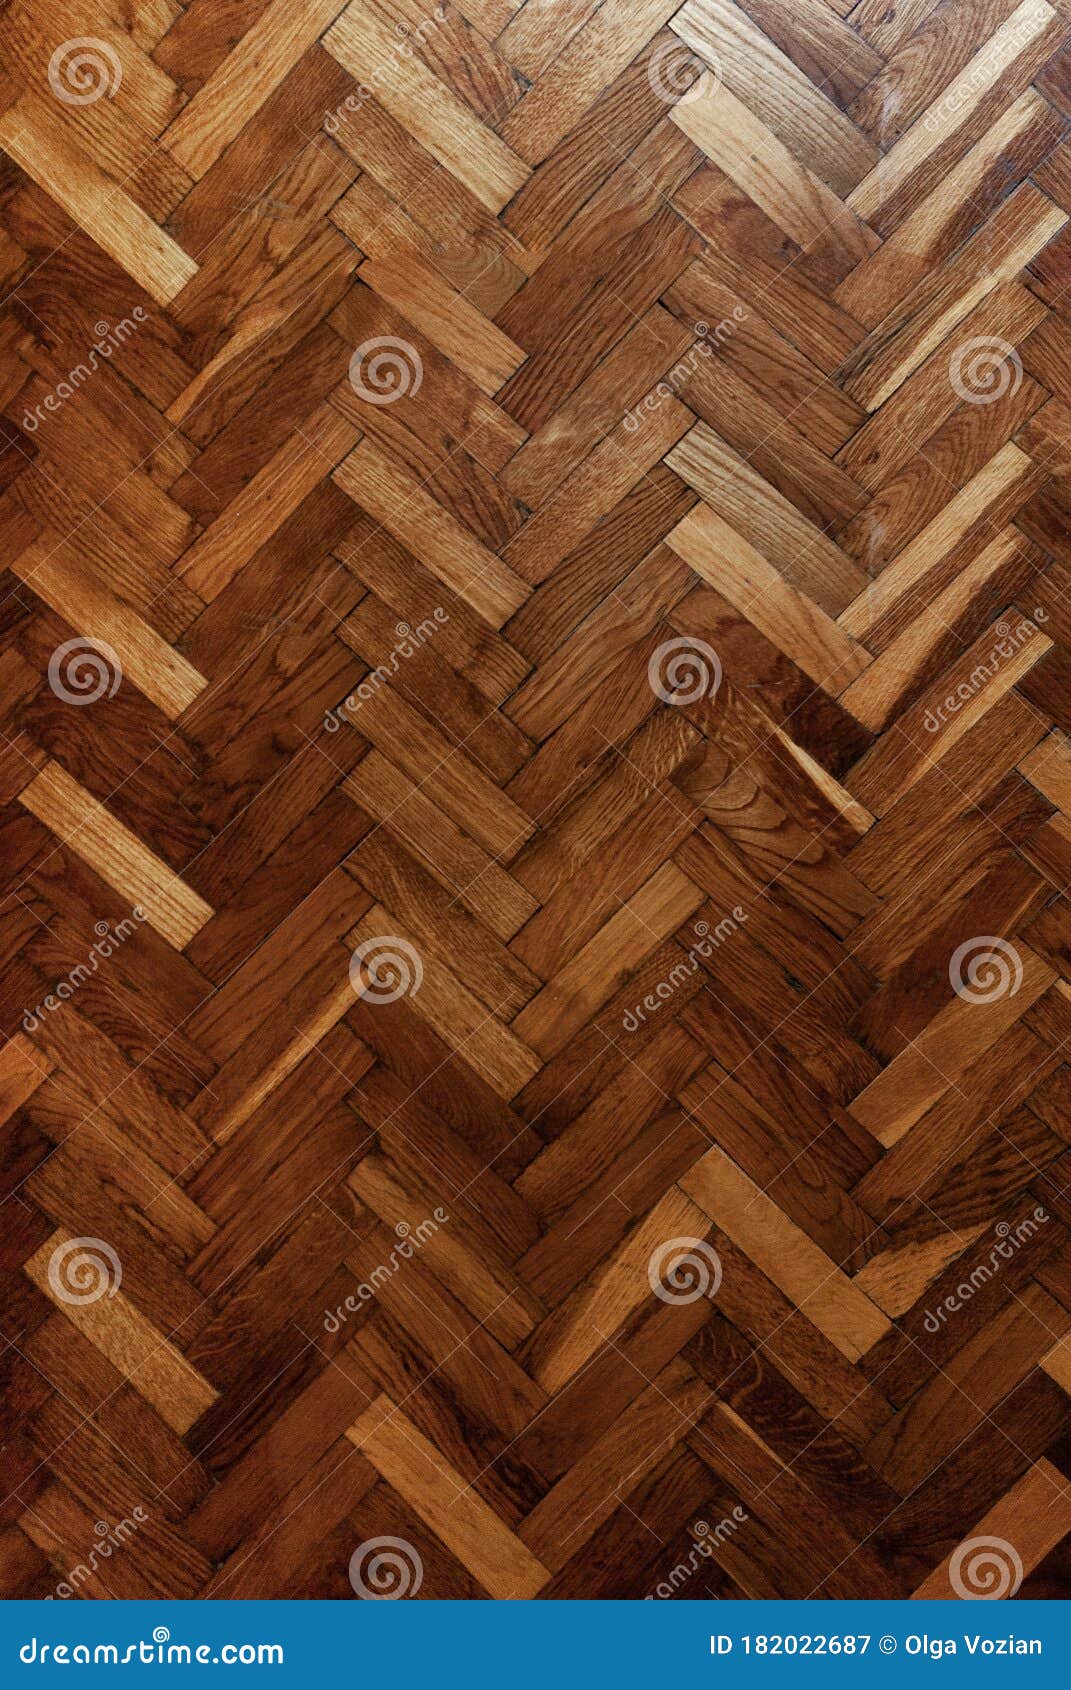 wooden parquet on the floor